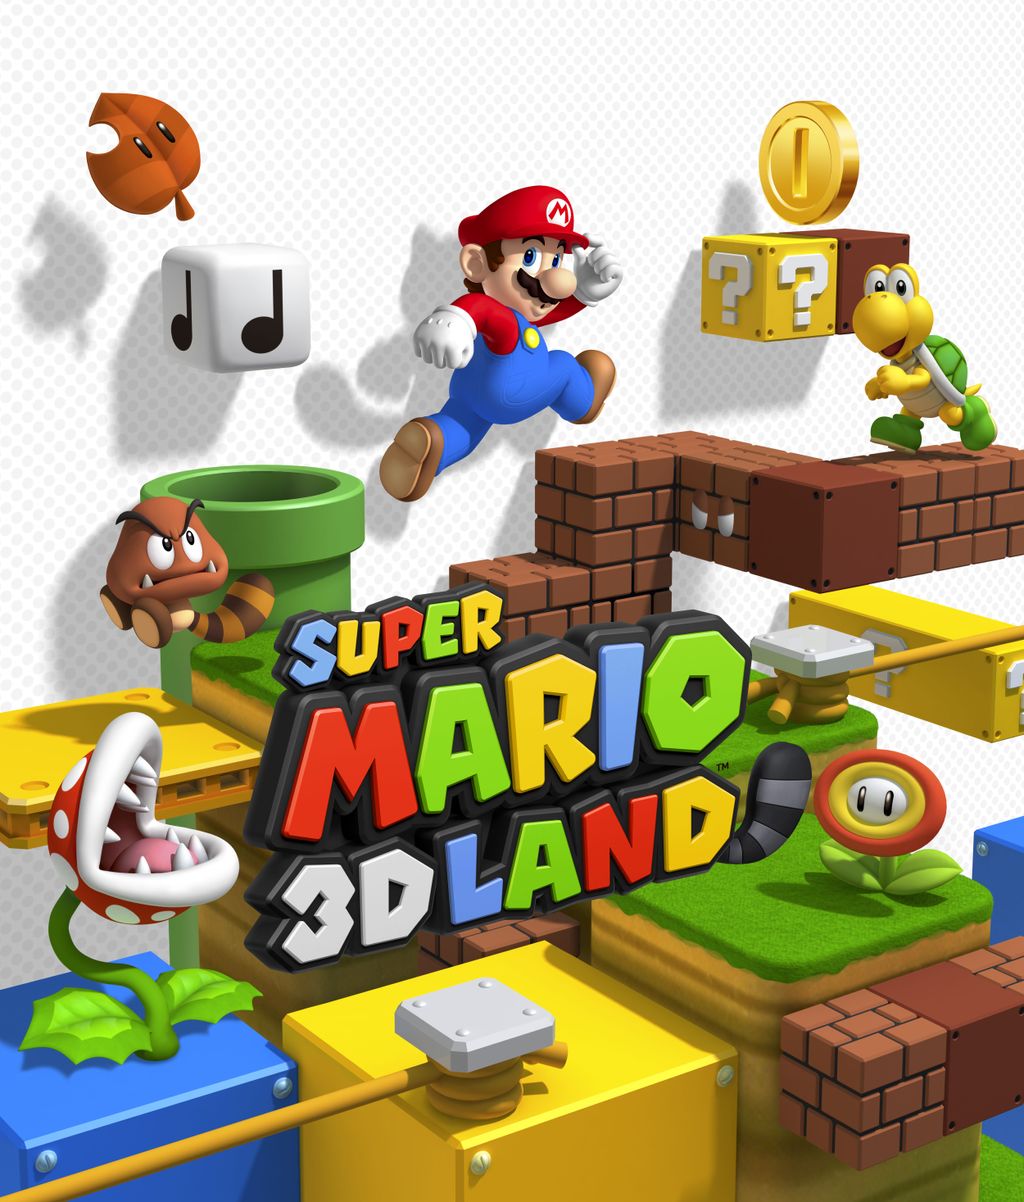 super-mario-3d-land-review-gamesradar